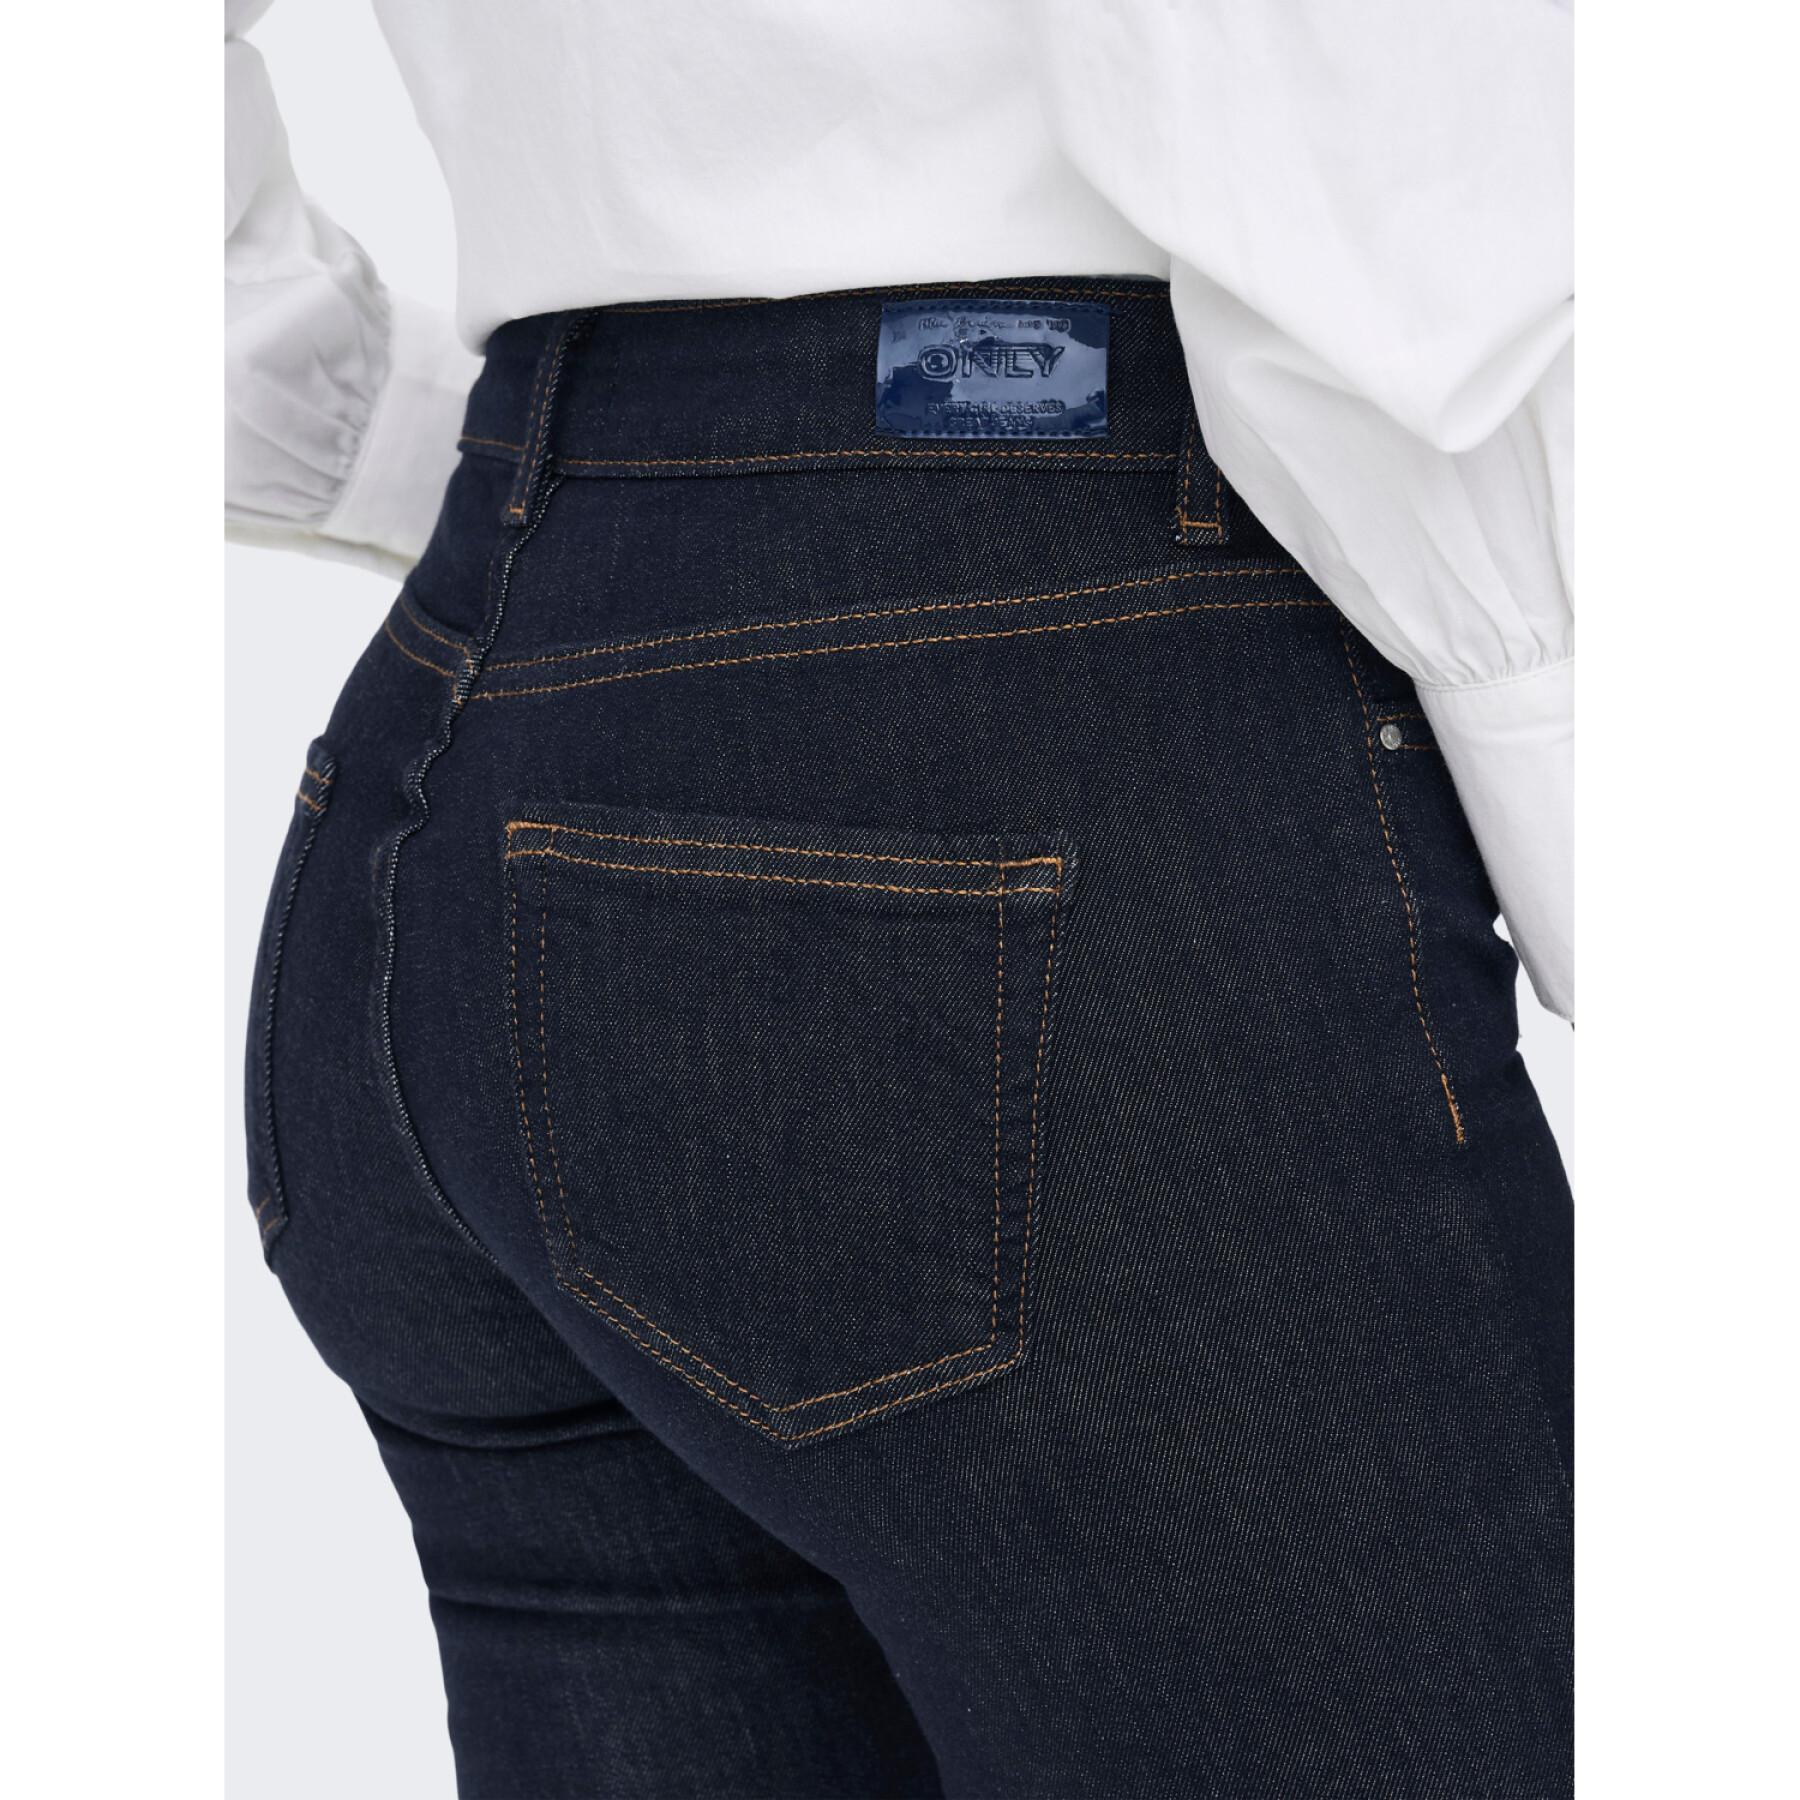 Women's jeans Only Onlblush rea023